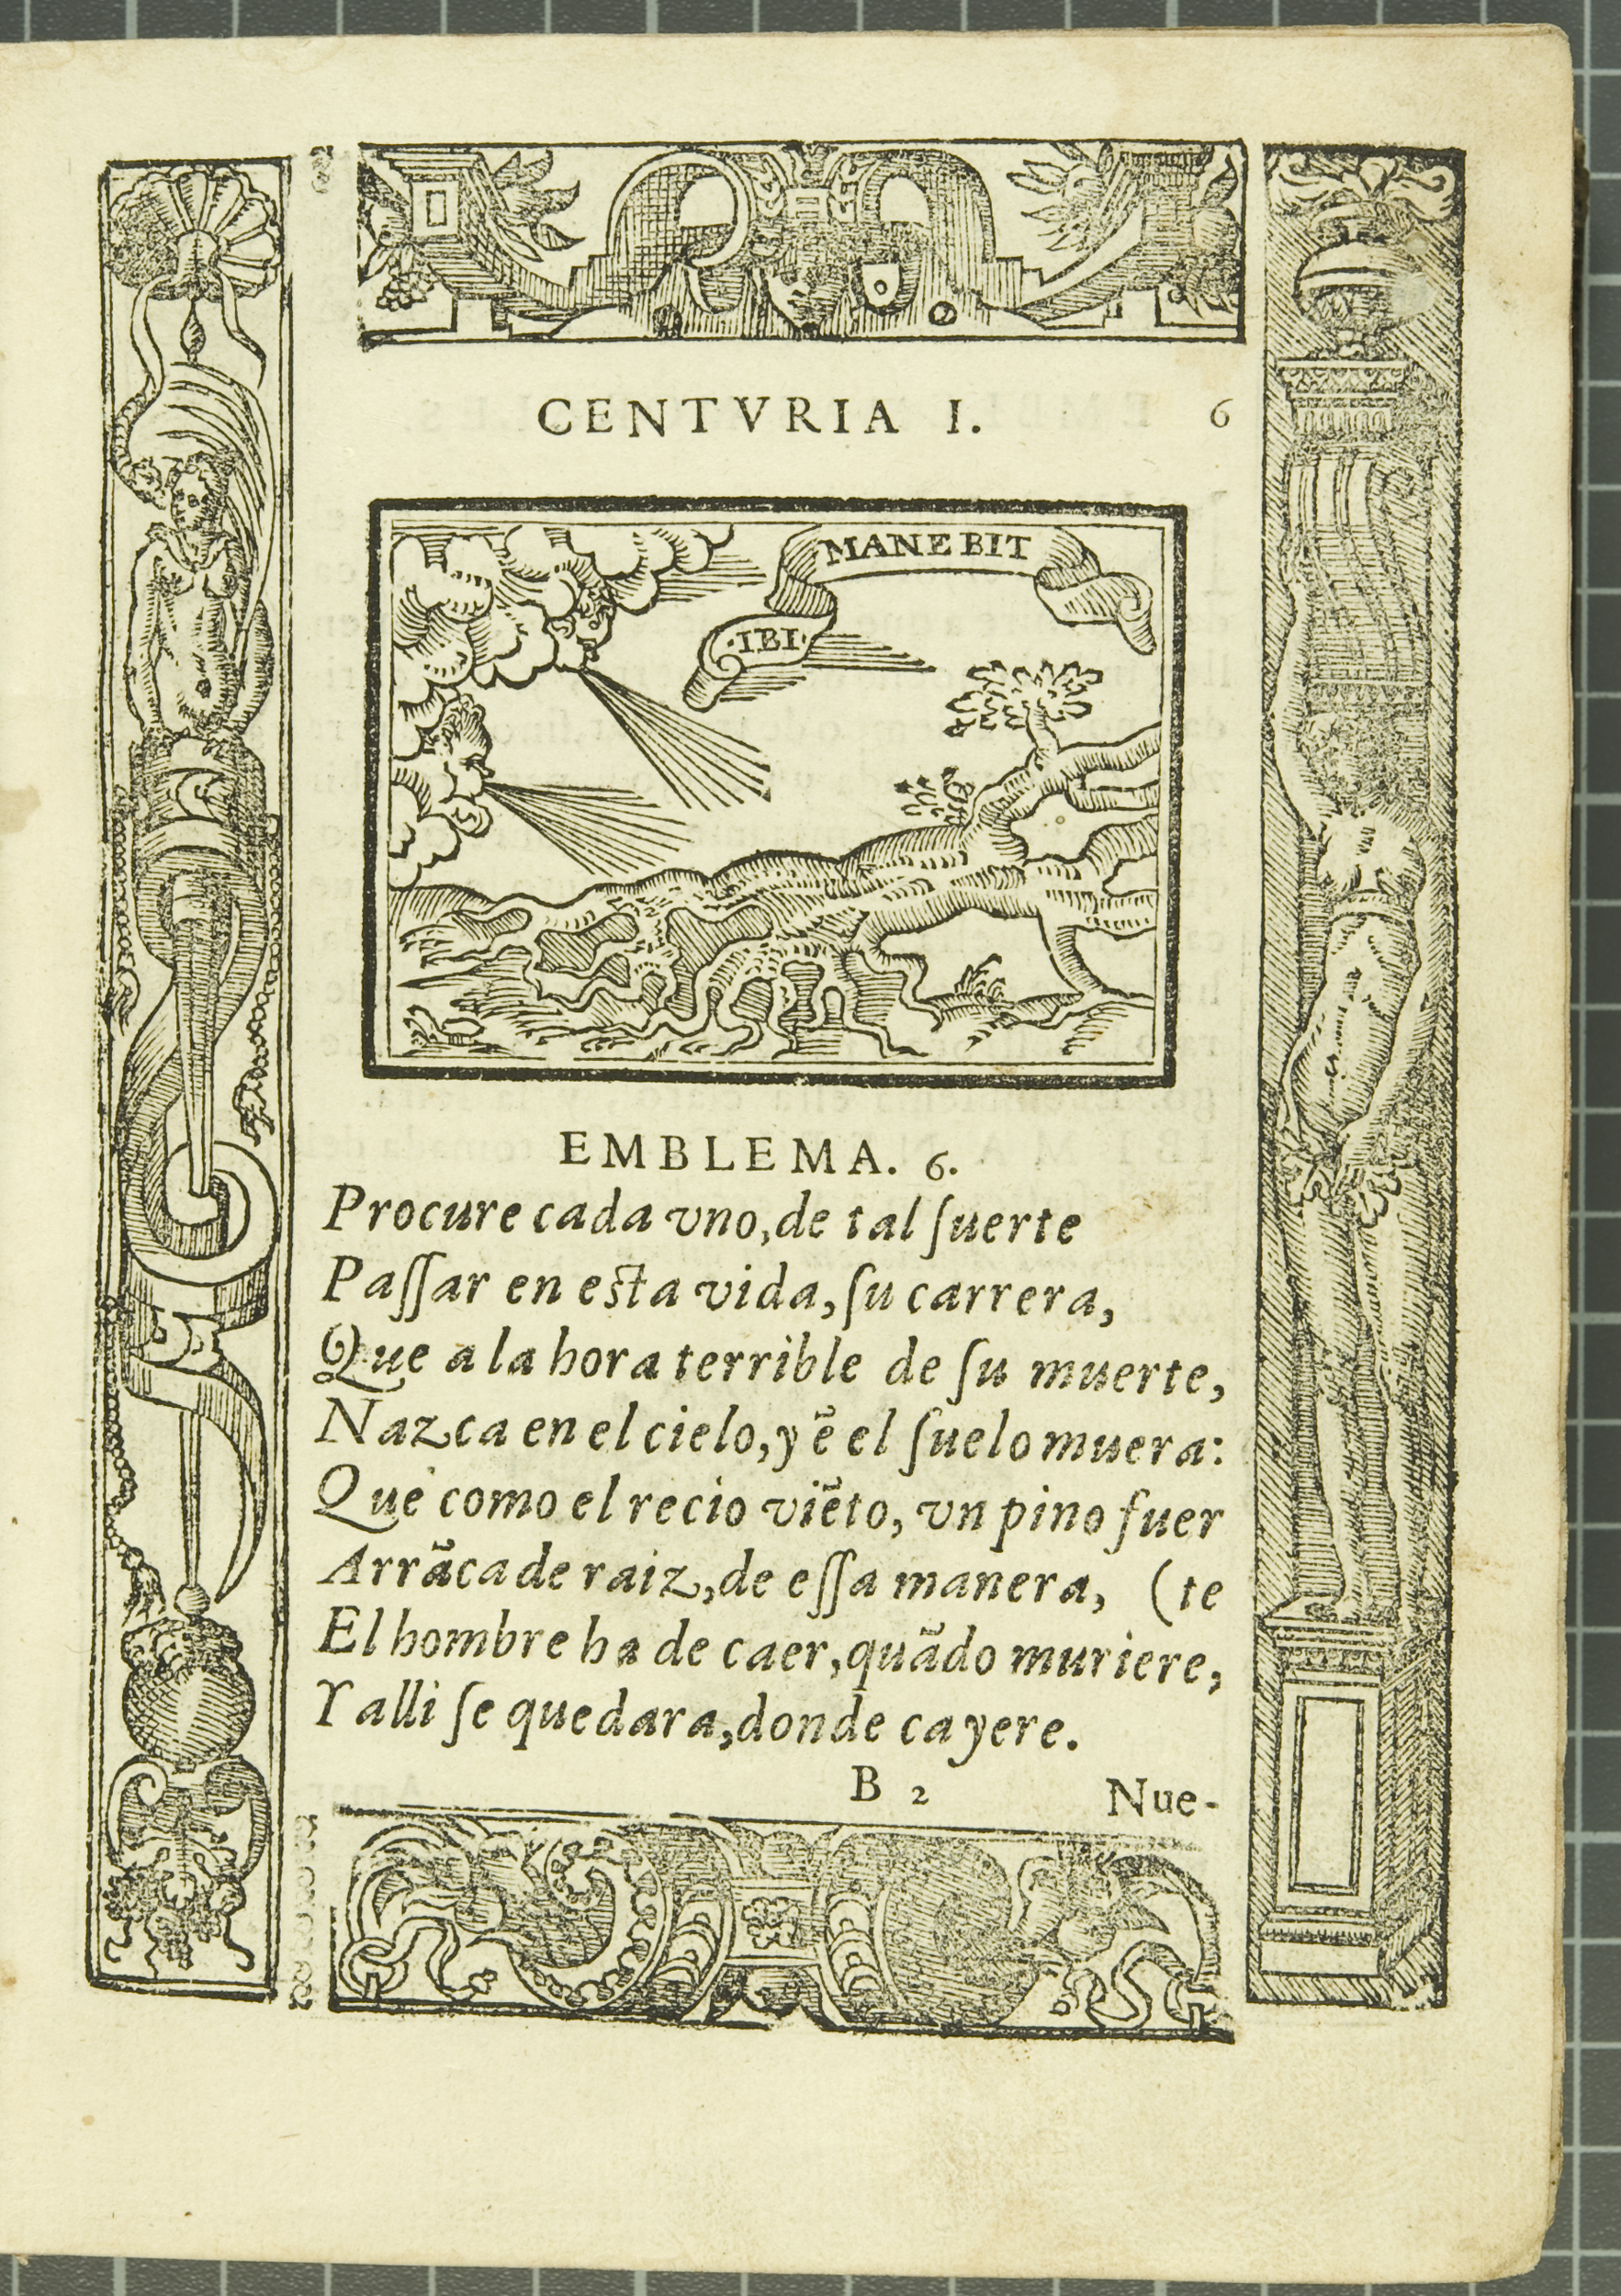 Emblem 6: "Ibi manebit" (Remain there), from Covarrubias’s Emblemas morales (1610).